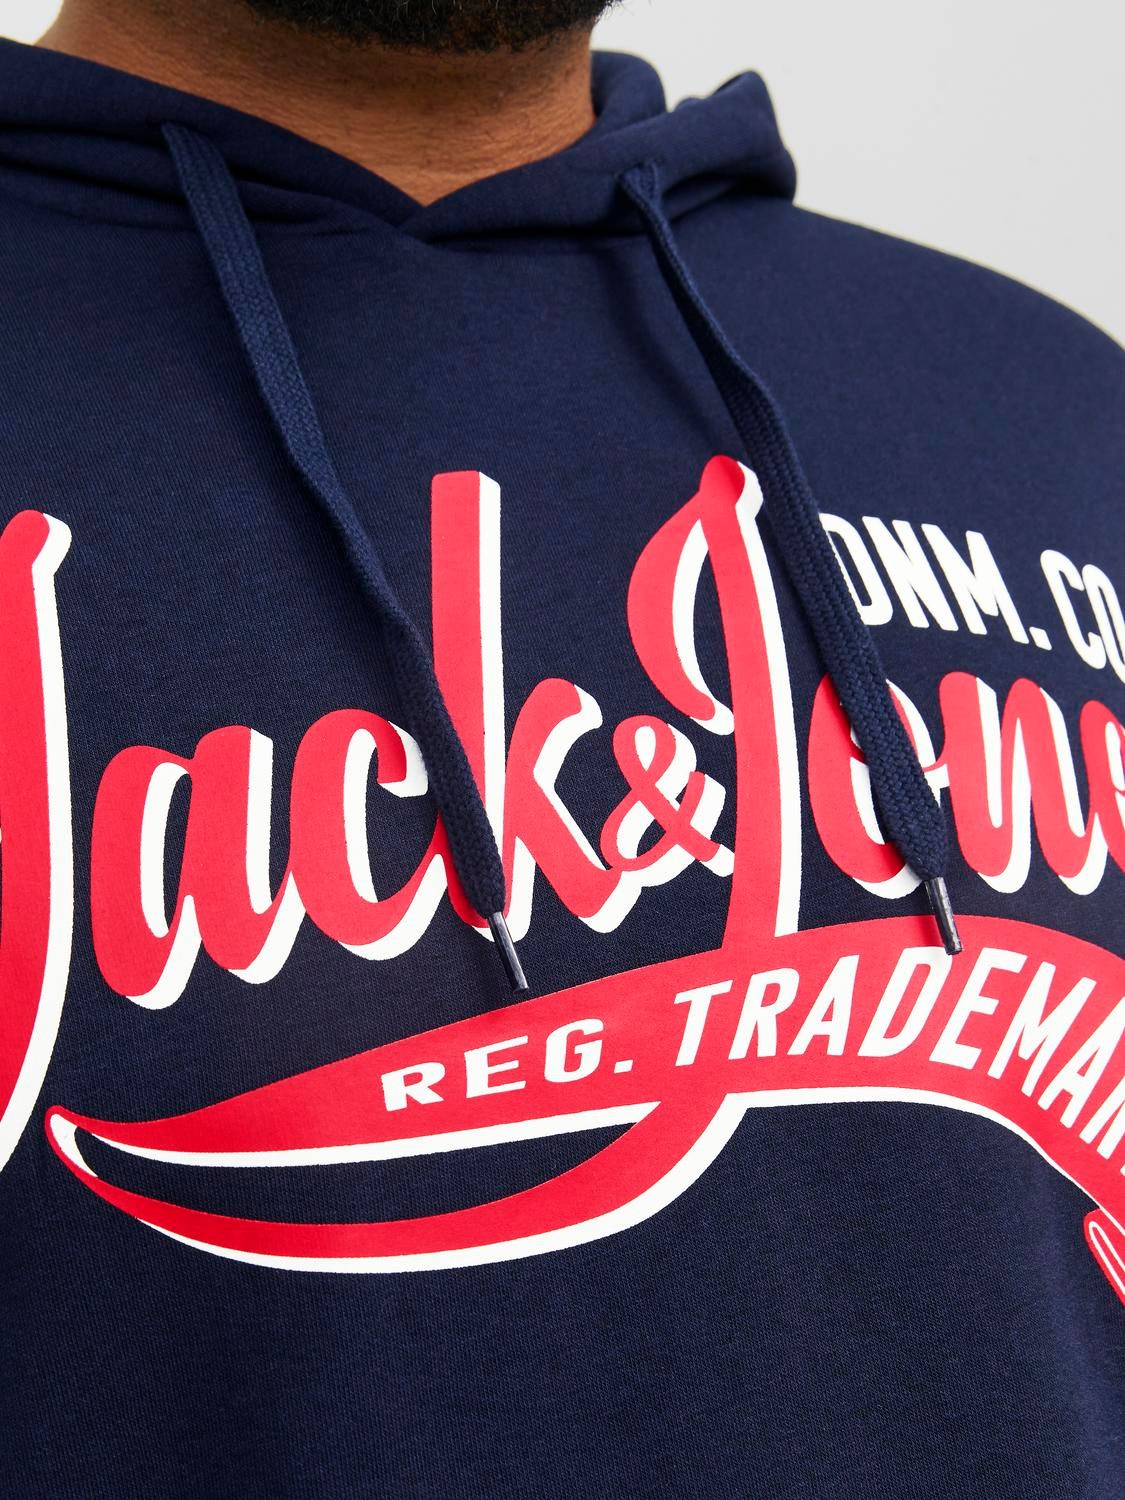 Jack & Jones Plus Size Sweat à capuche Logo -Navy Blazer - 12236803